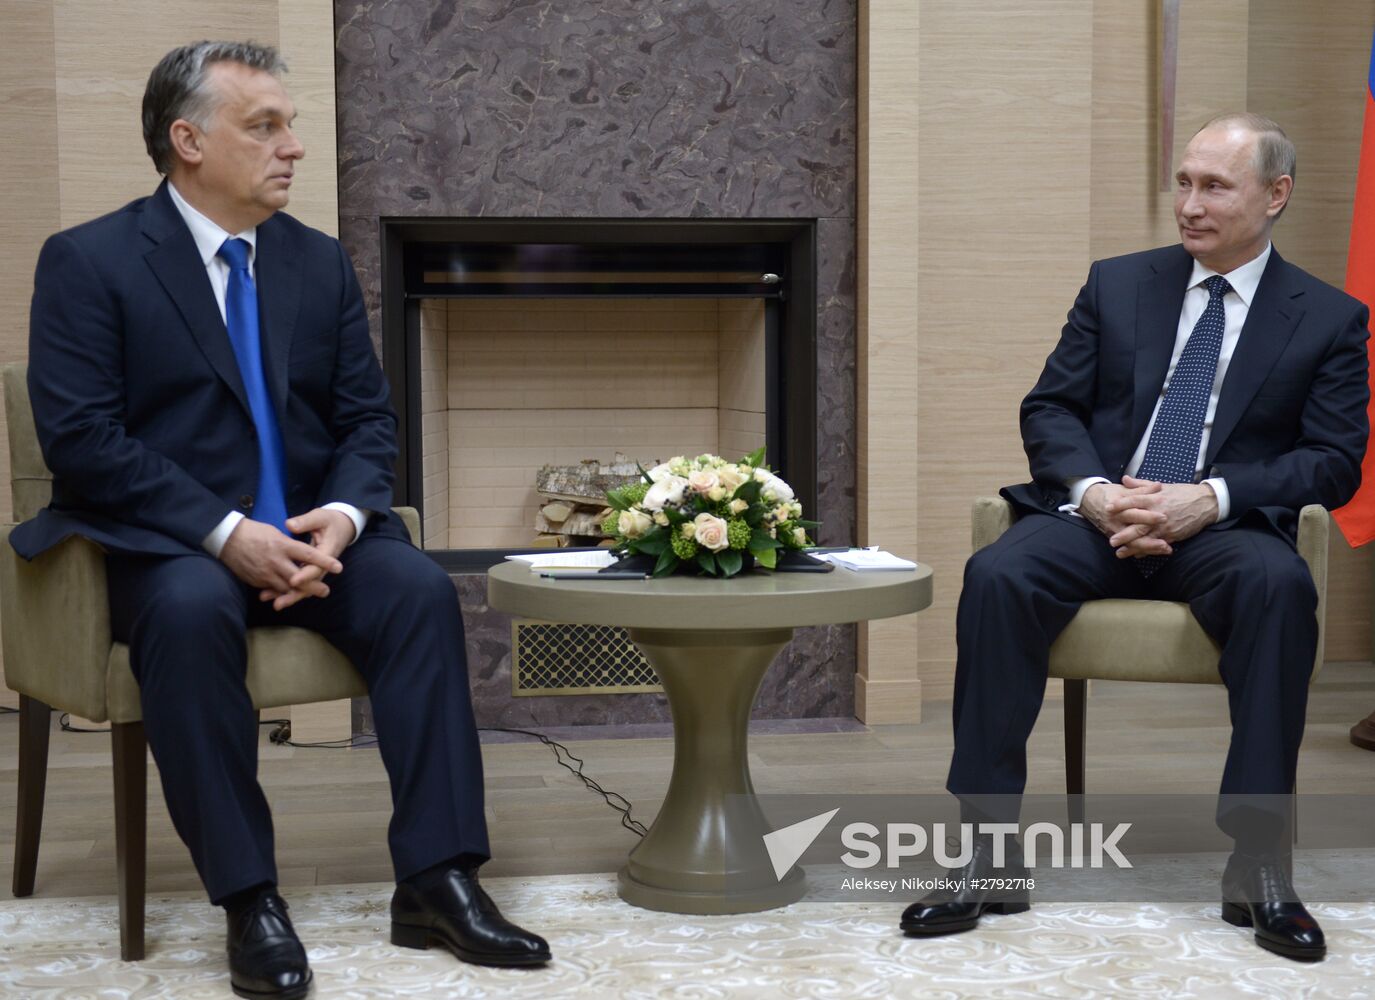 Russian President Vladimir Putin's meeting with Hungarian Prime Minister Viktor Orbán